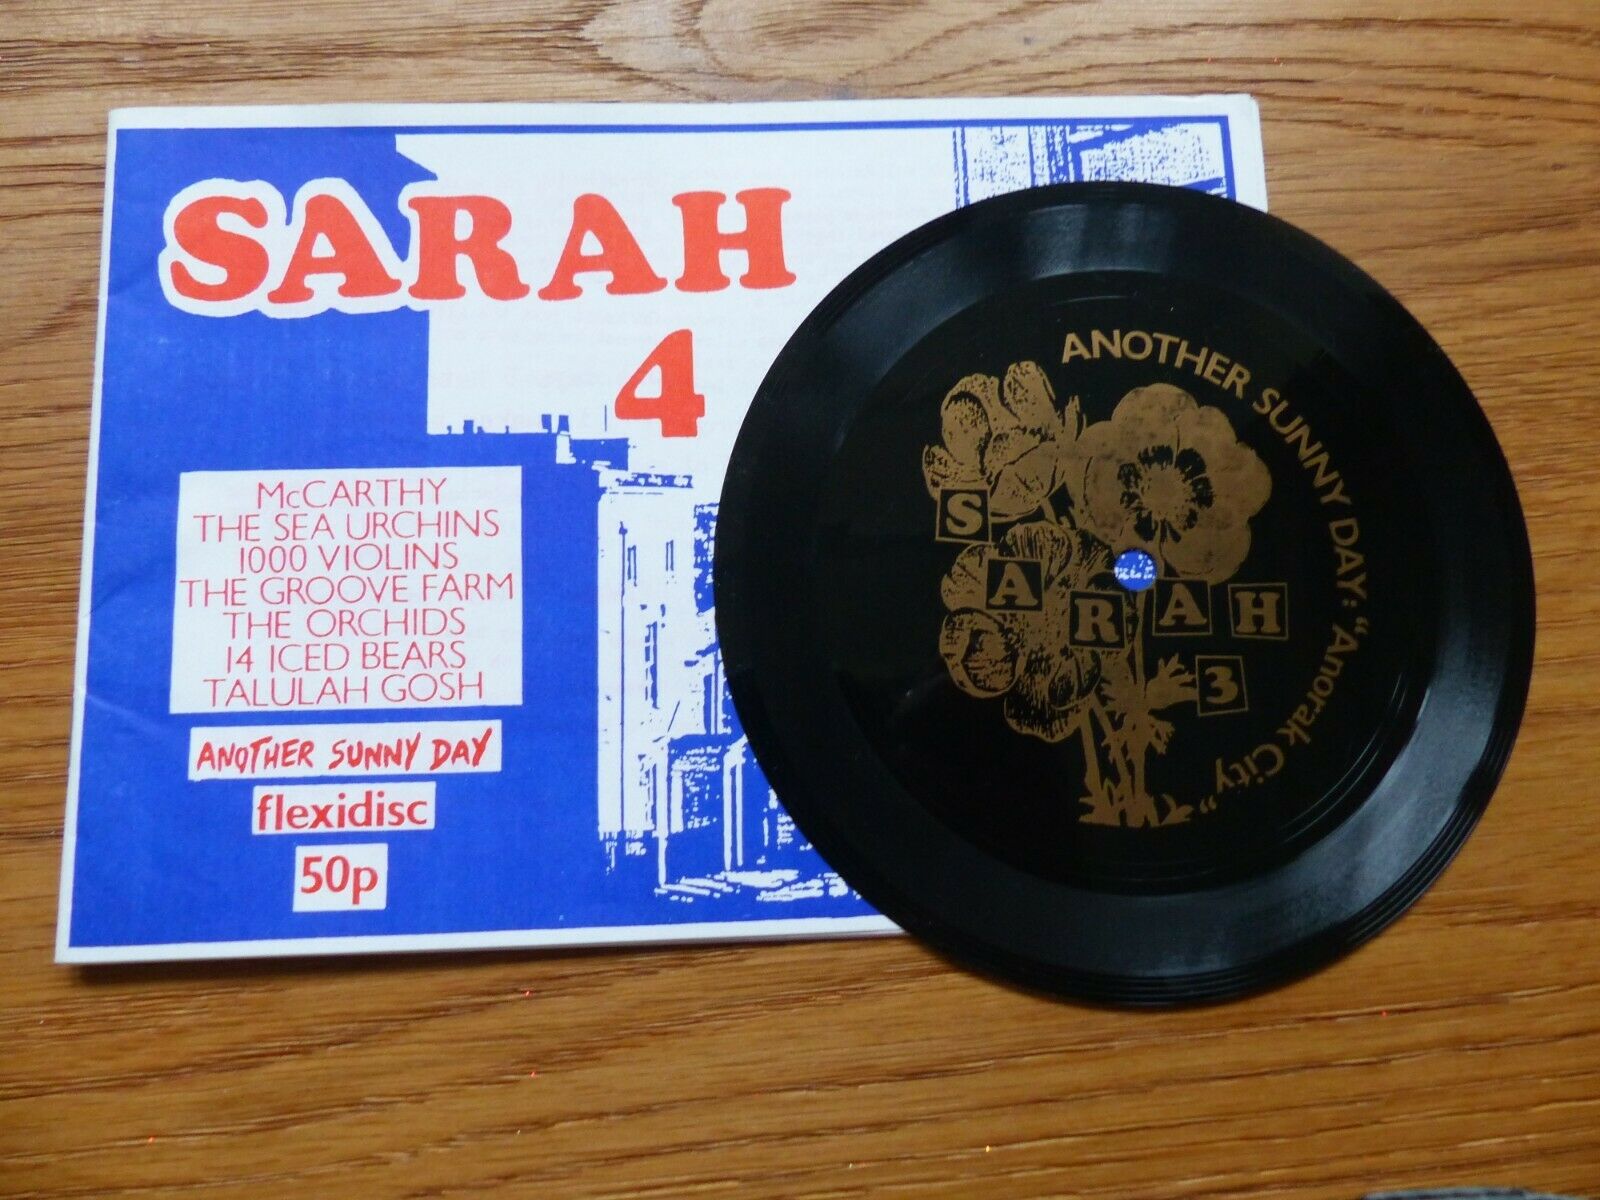 popsike.com - SARAH 4 FANZINE SARAH RECORDS INDIE TWEE C86 ANOTHER